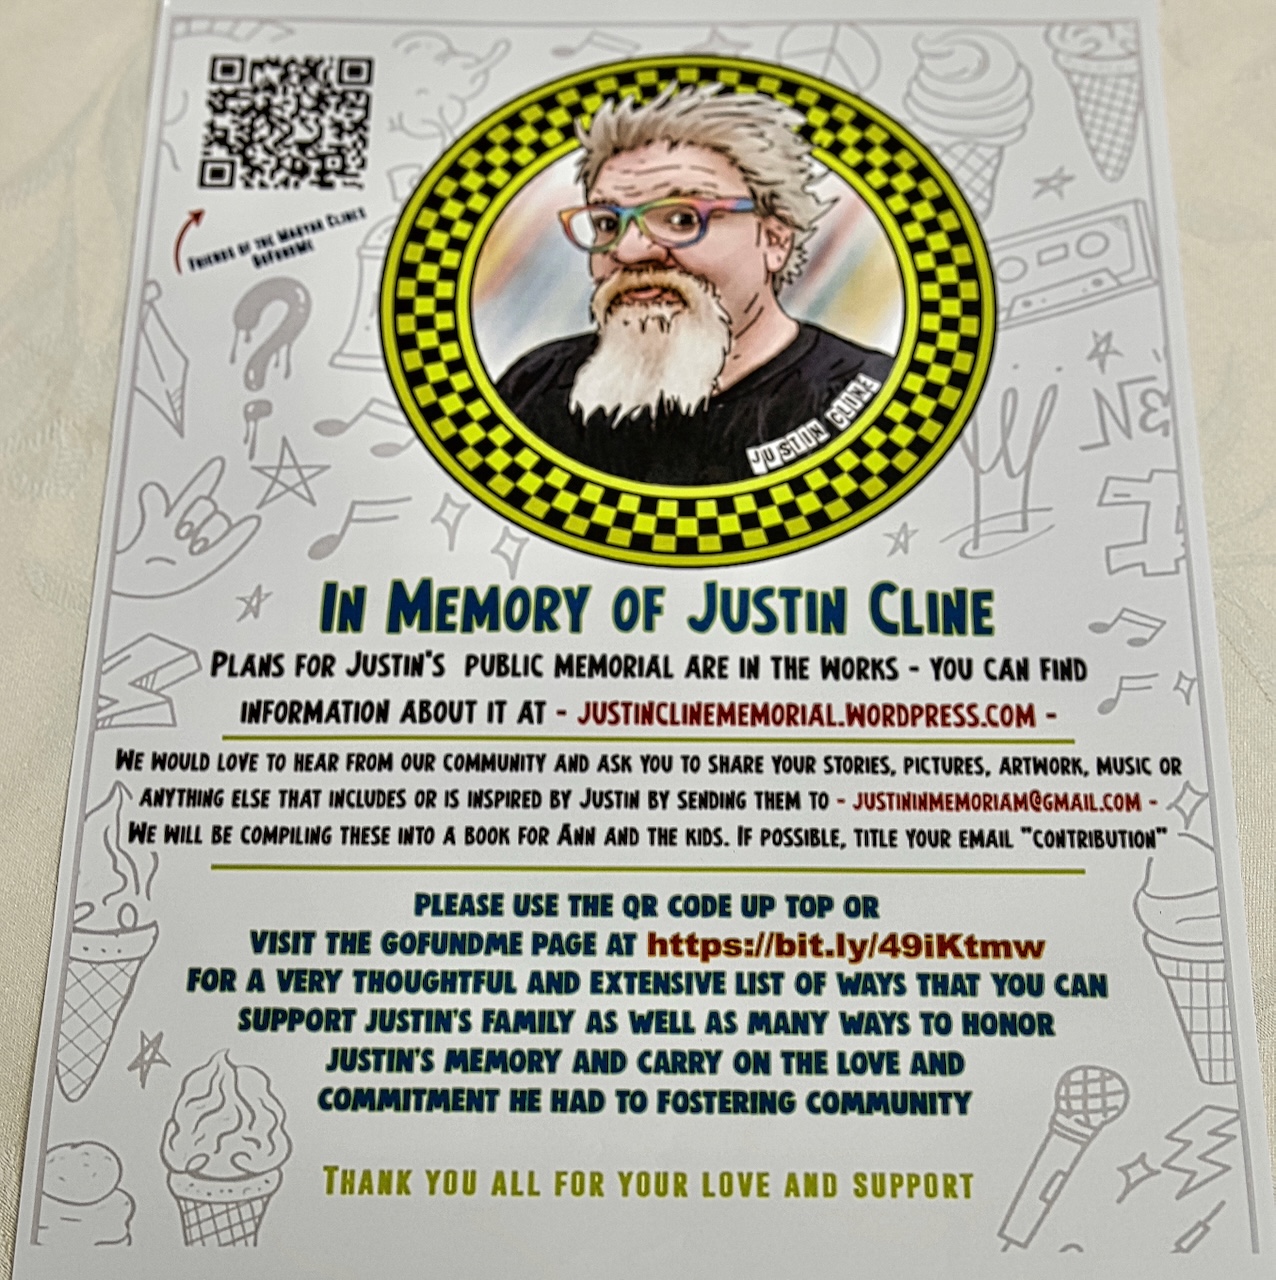 in memory of Justin cline